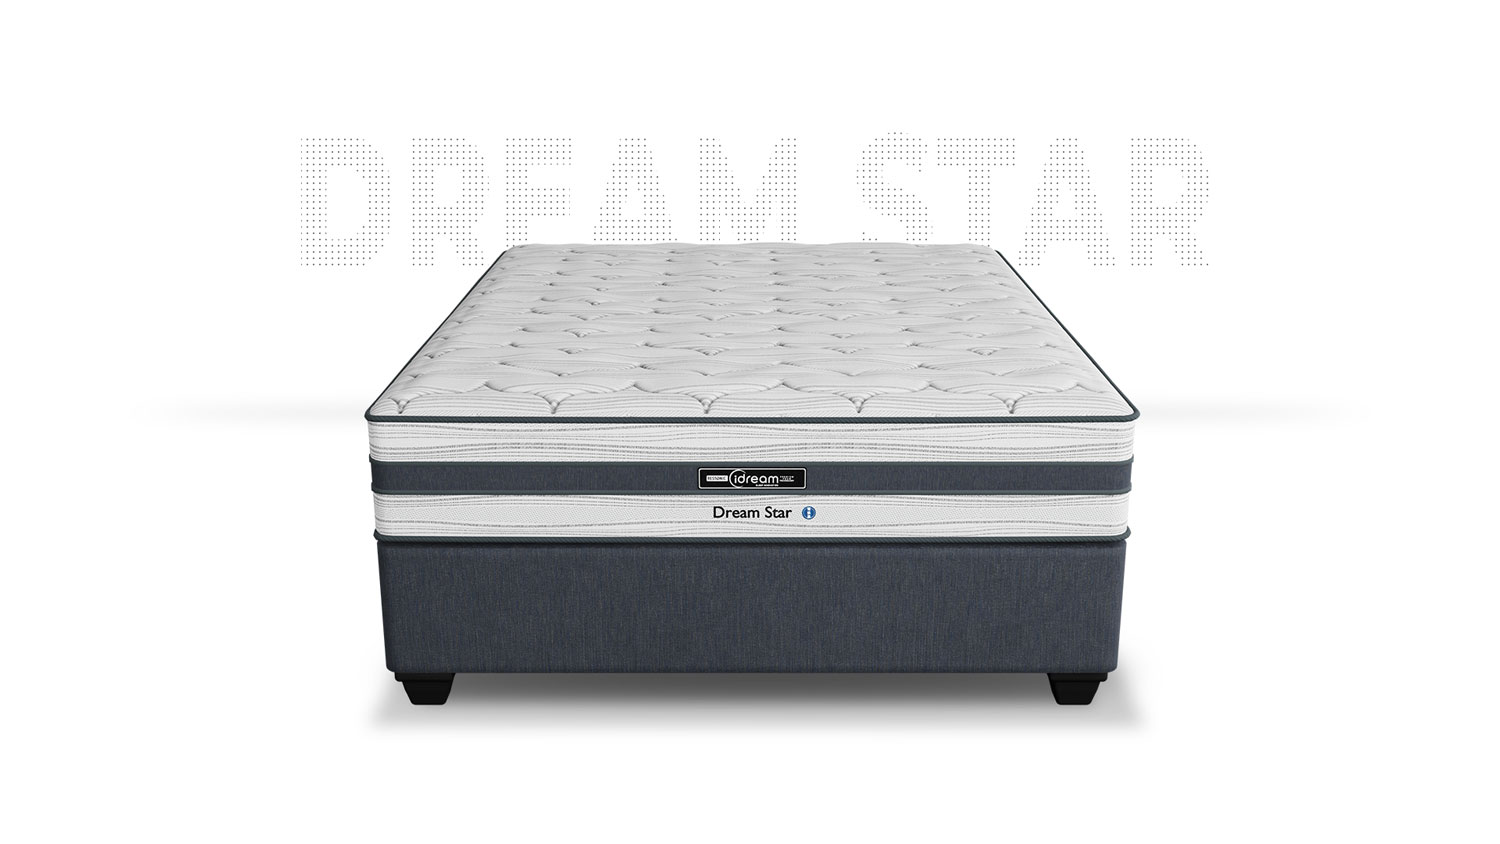 iDream Dream Star Bed Header Title